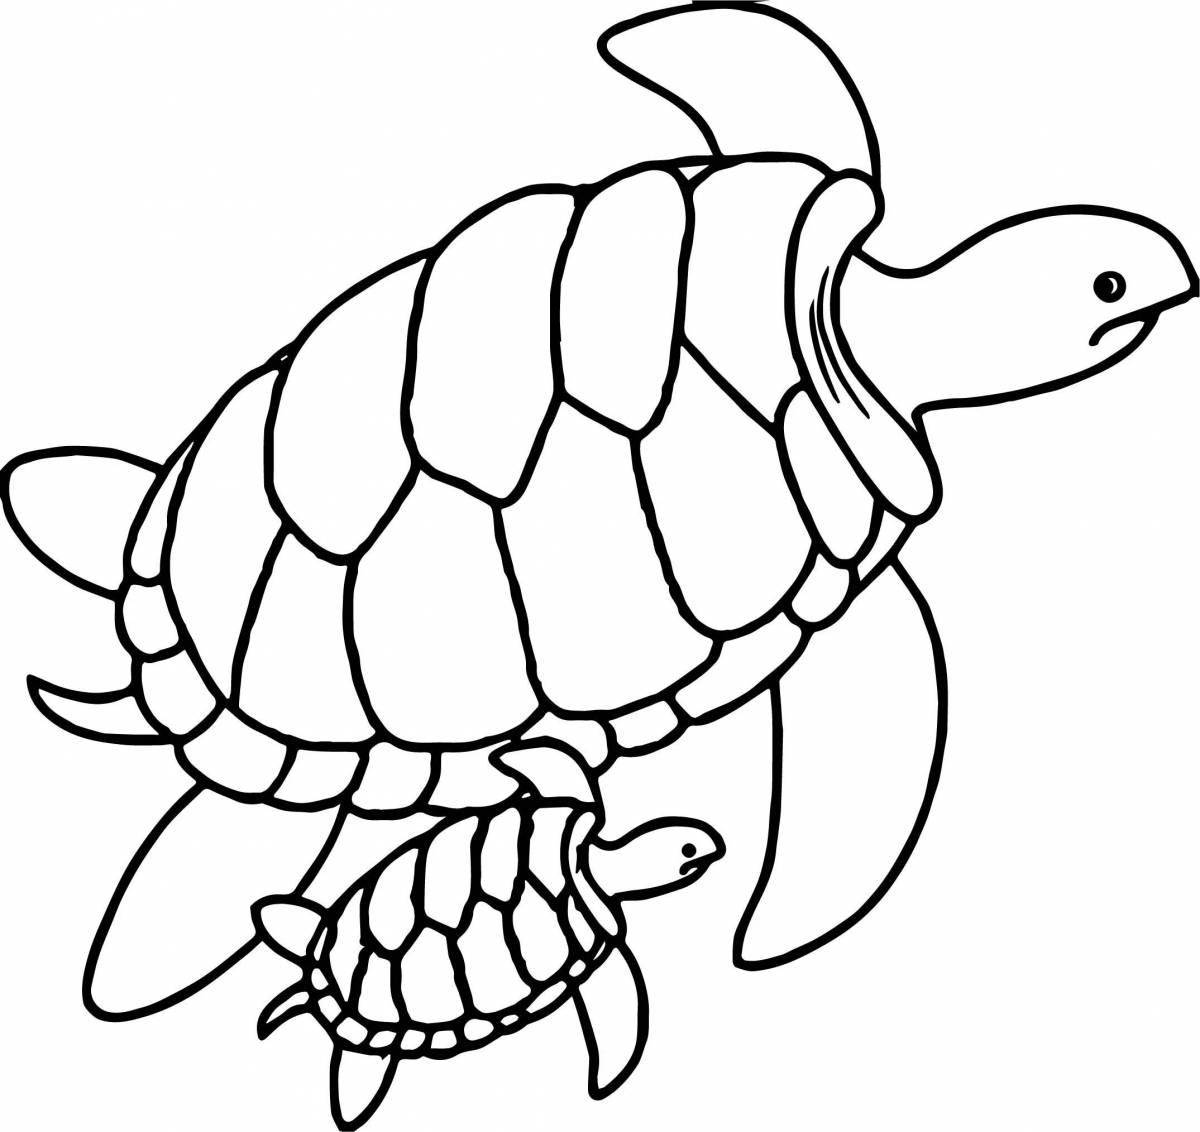 Colouring funny sea turtle